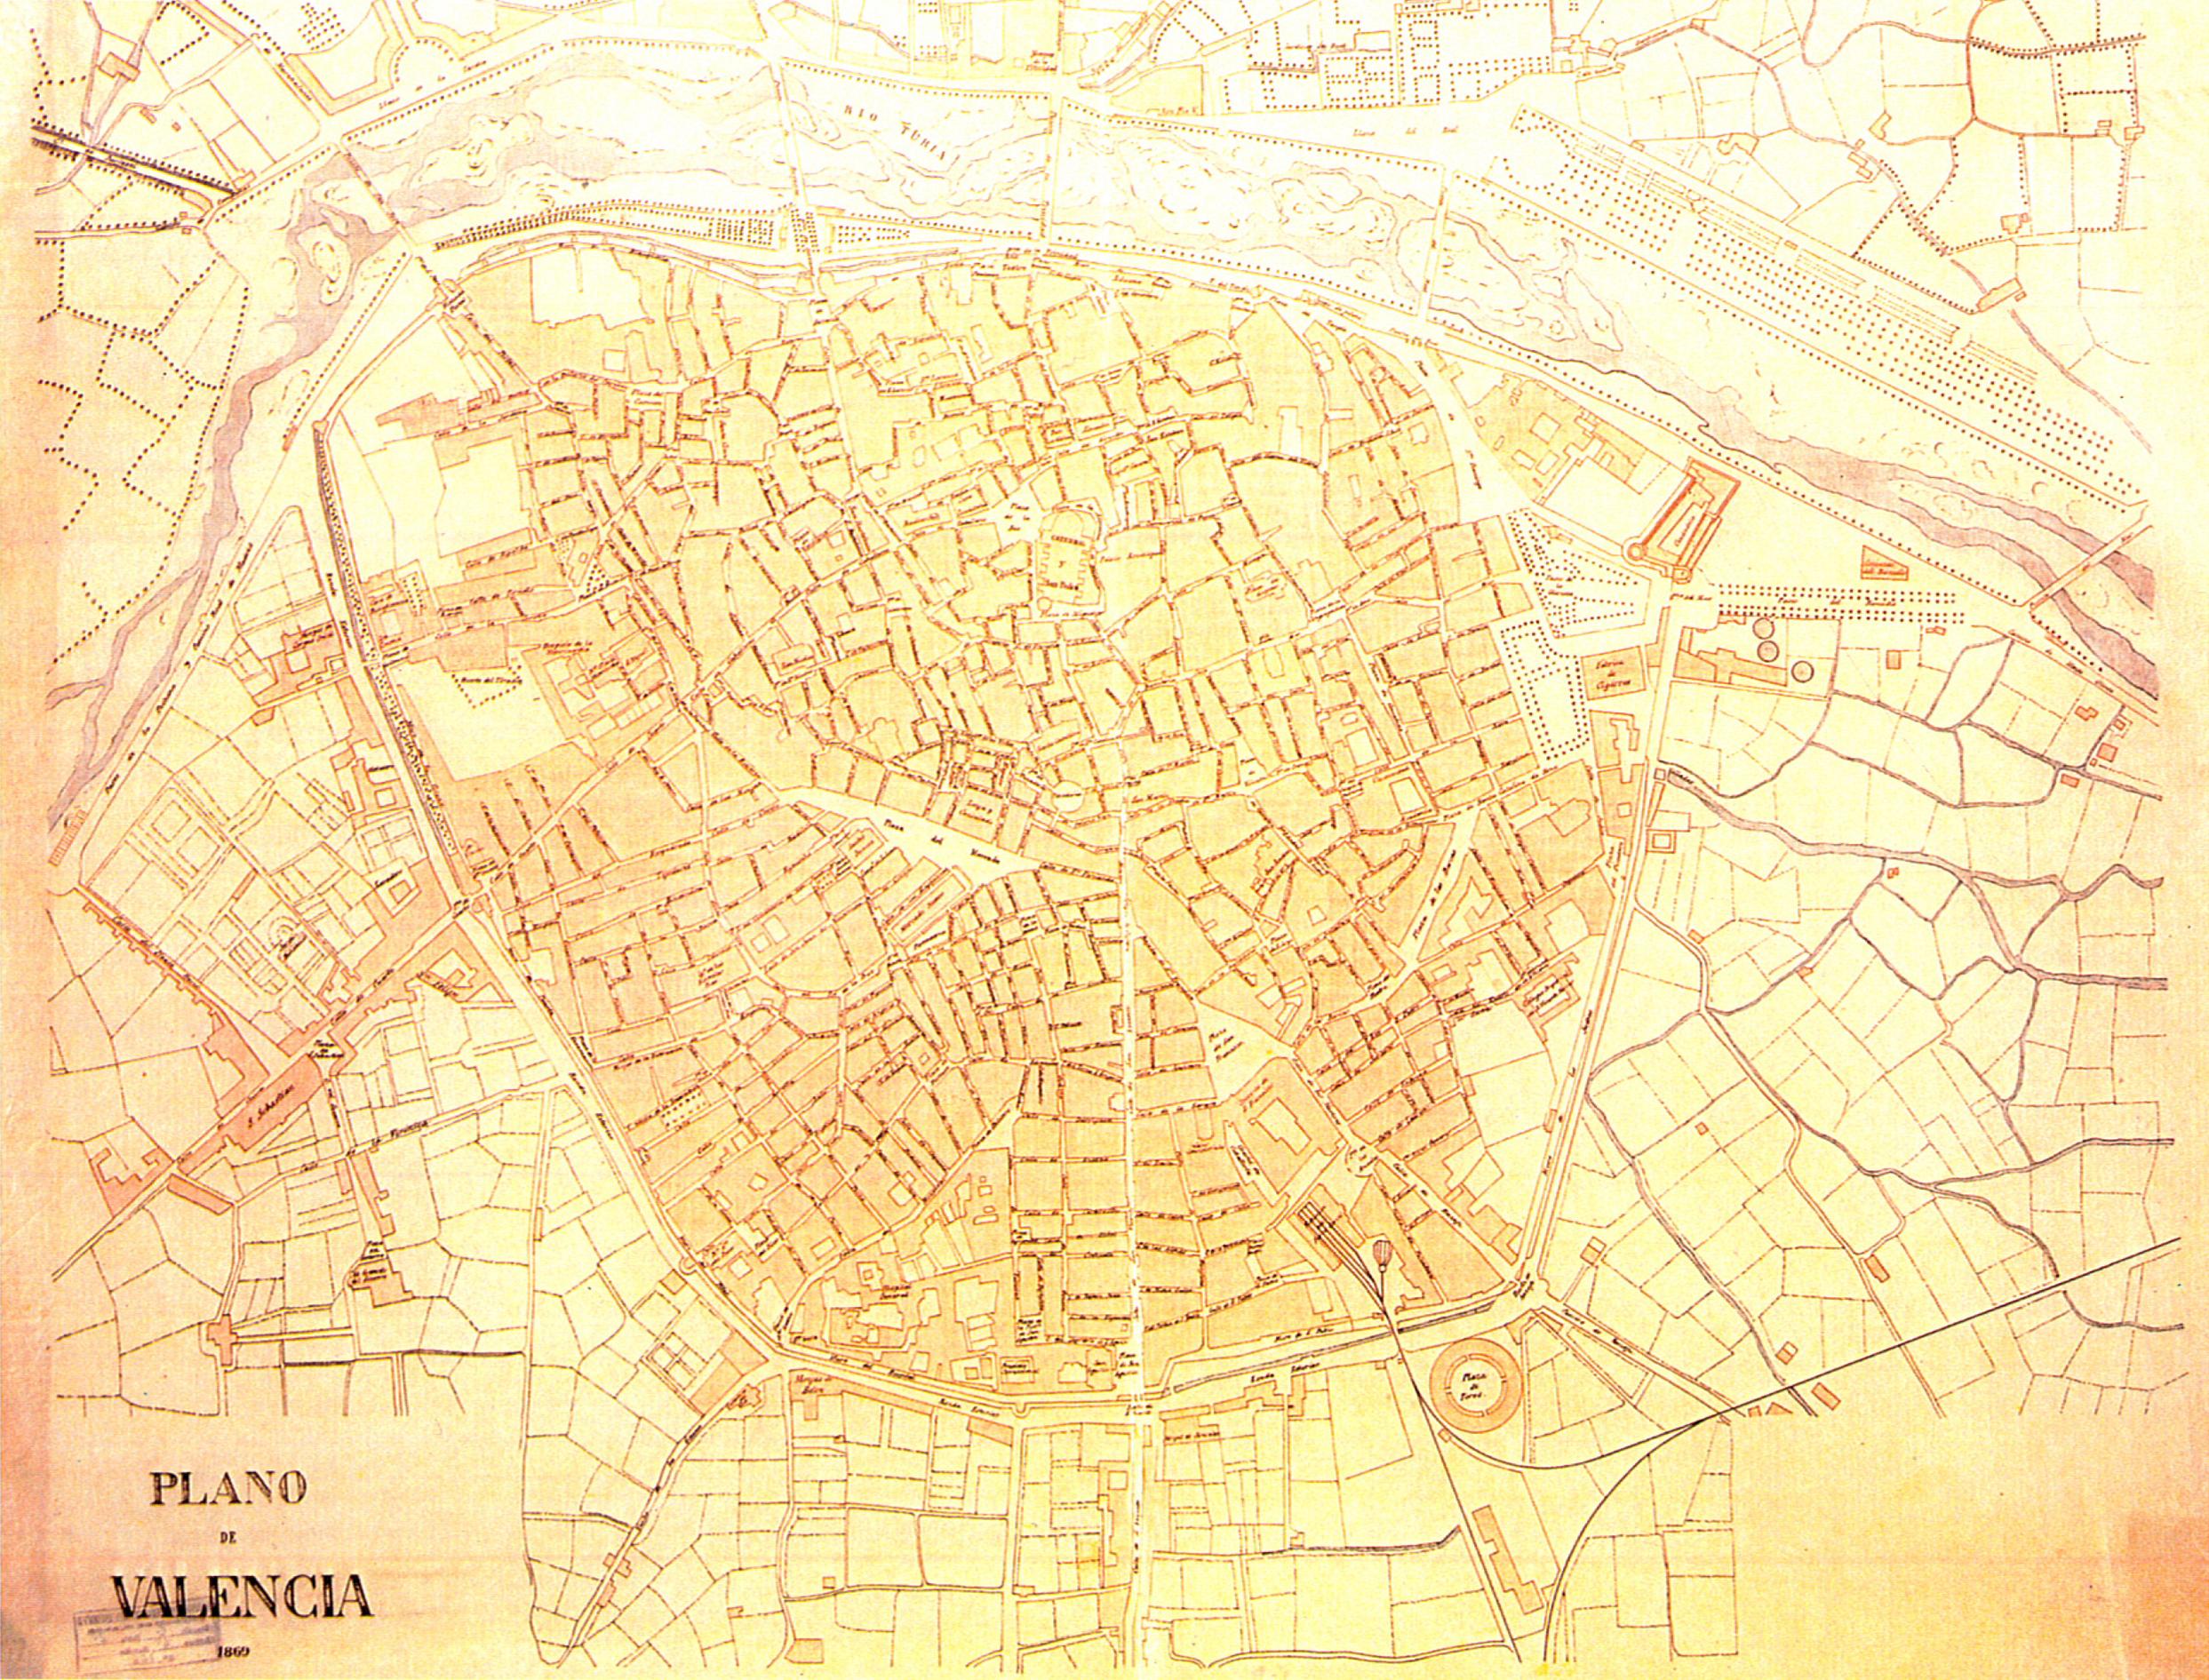 Plano de Valencia 1869